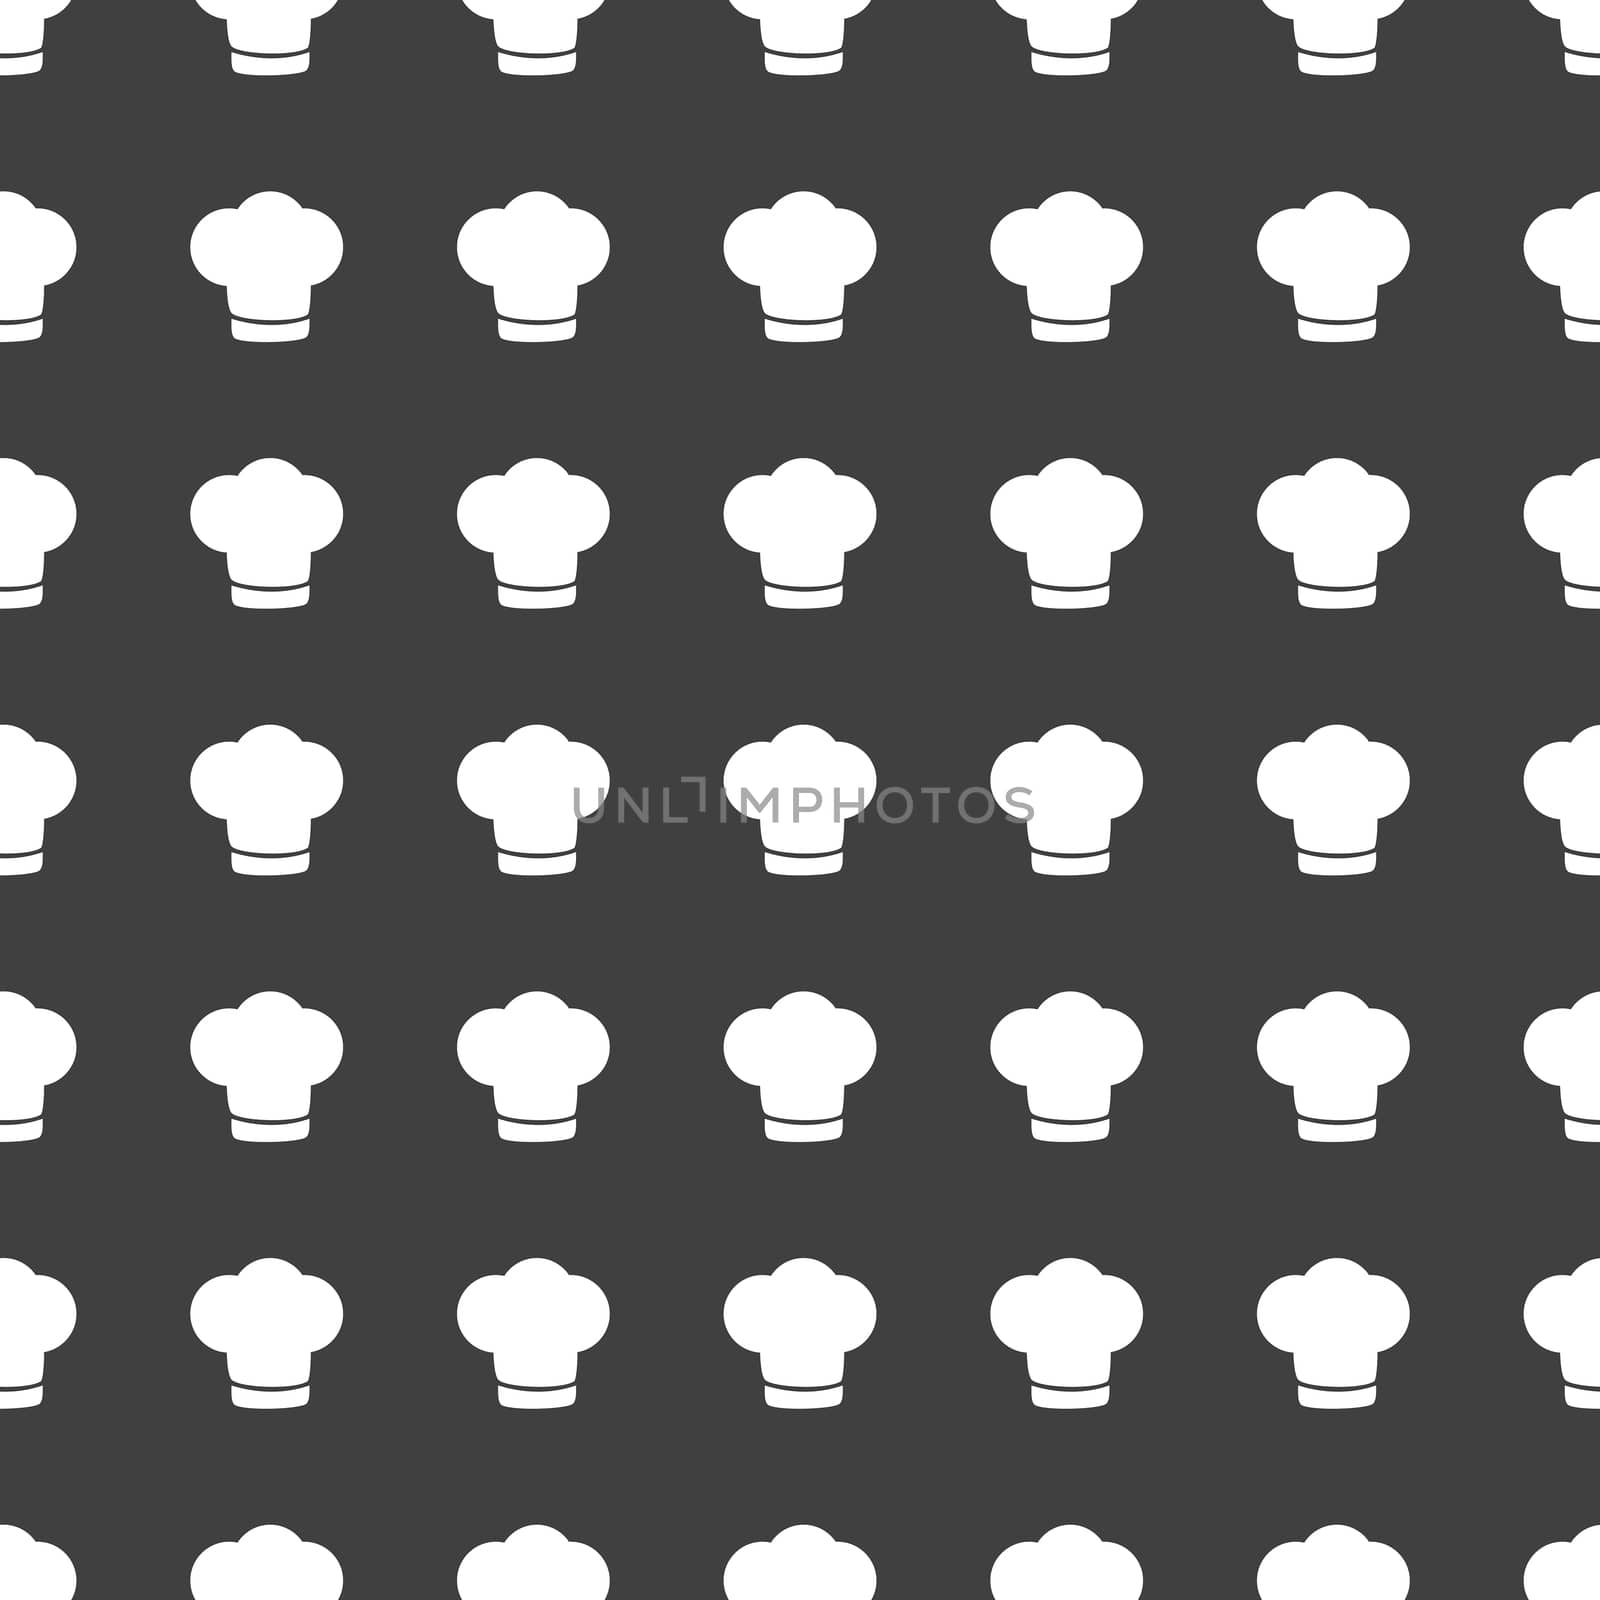 Chef cap web icon. flat design. Seamless gray pattern.